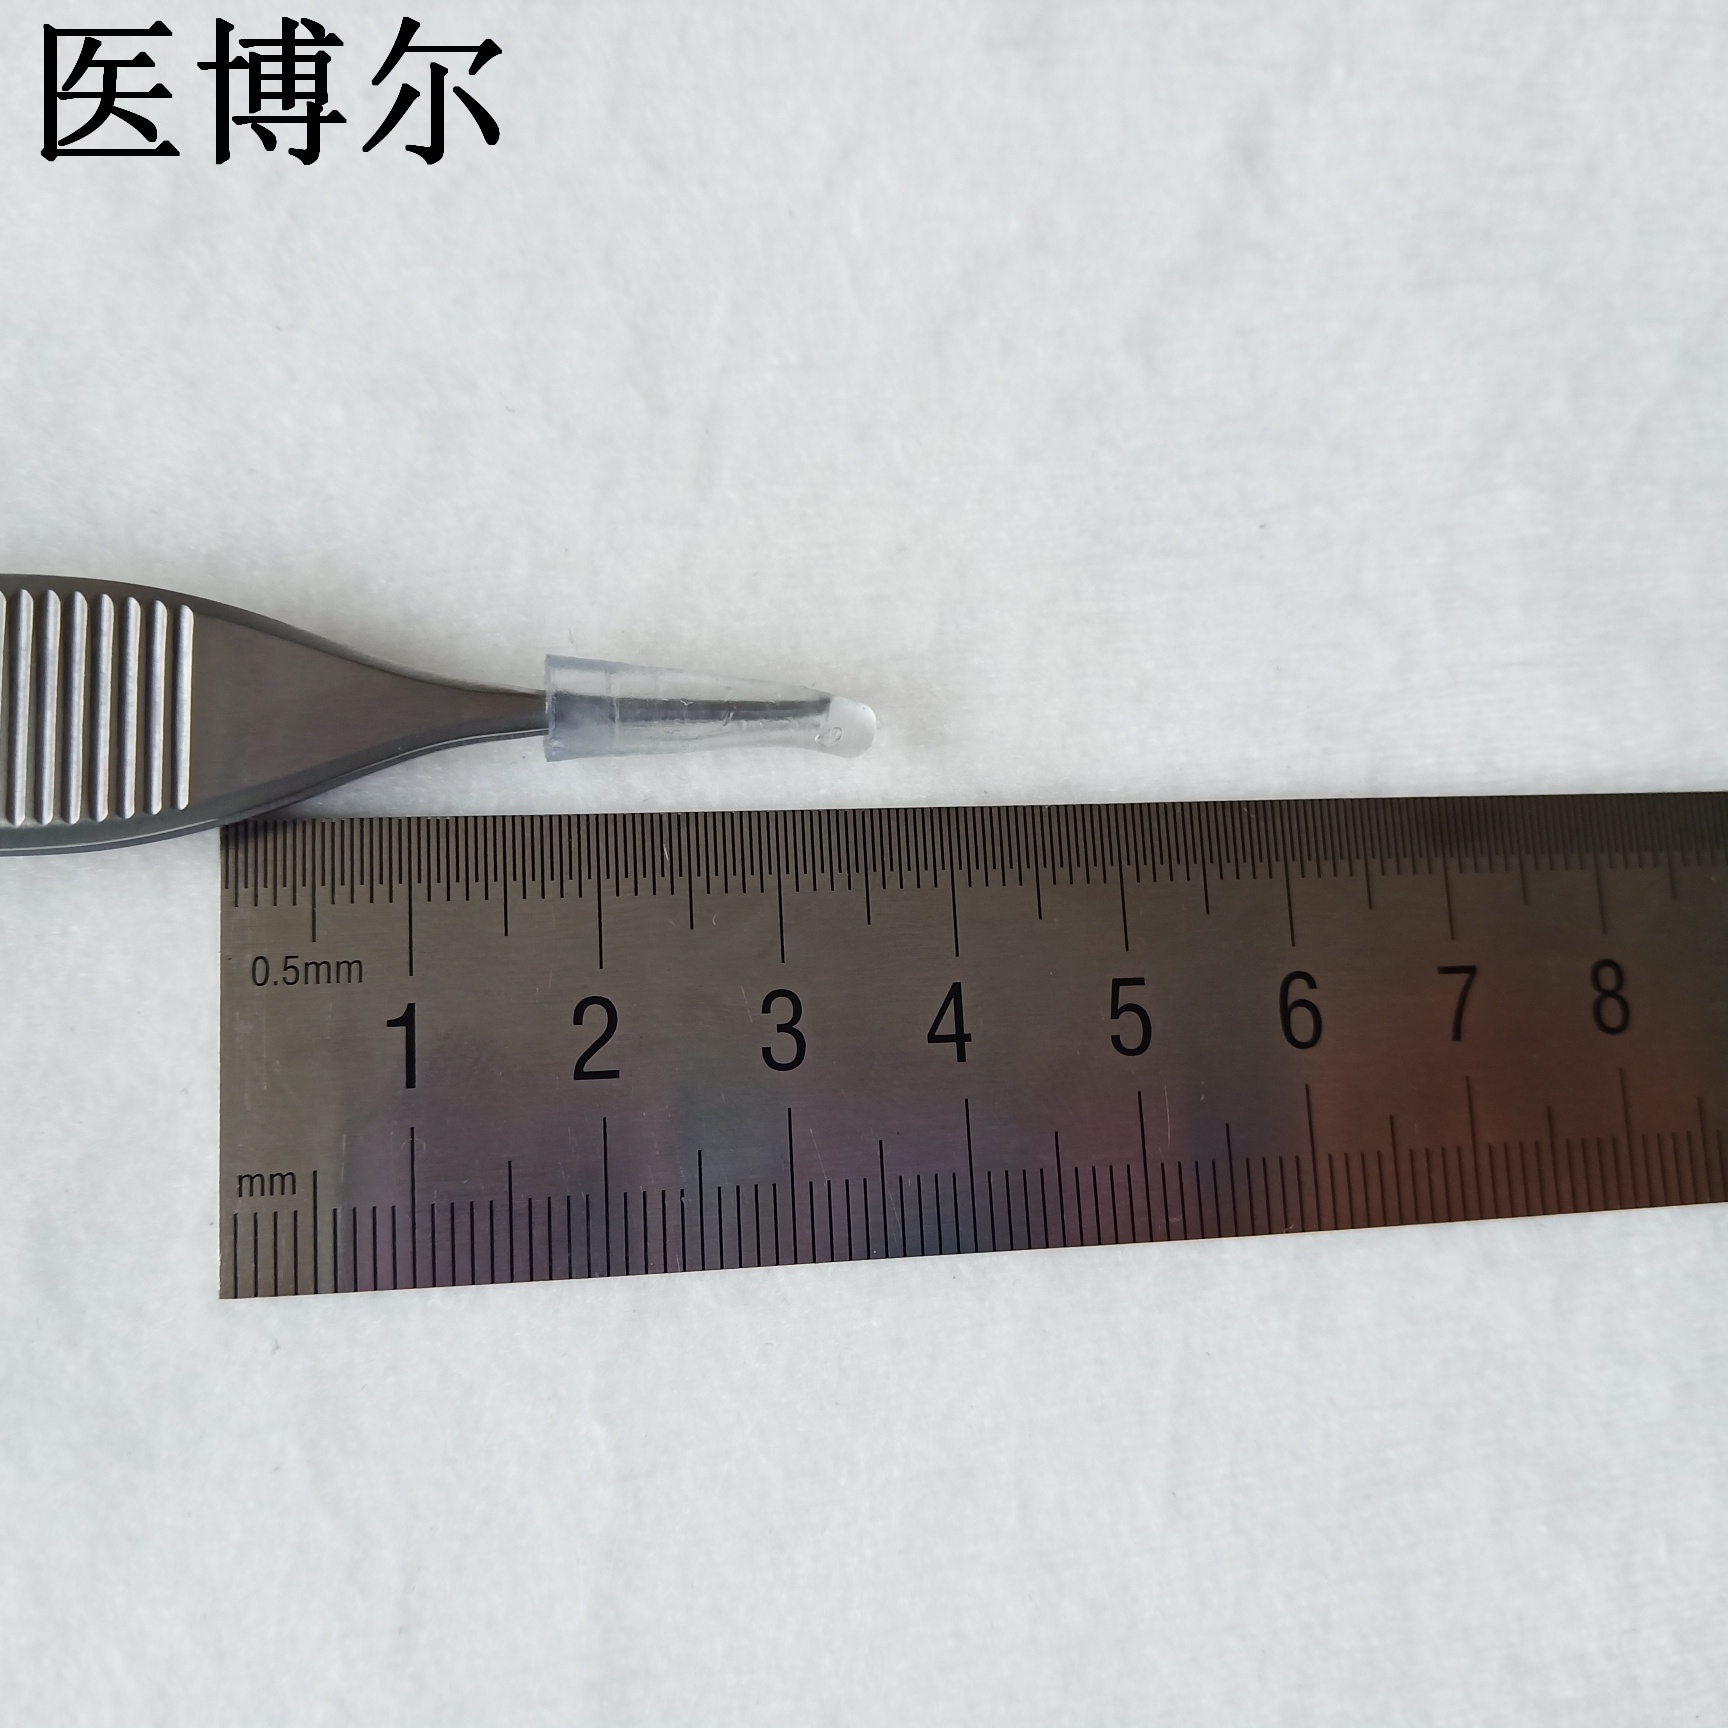 14cm整形镊0.8齿 (6).jpg